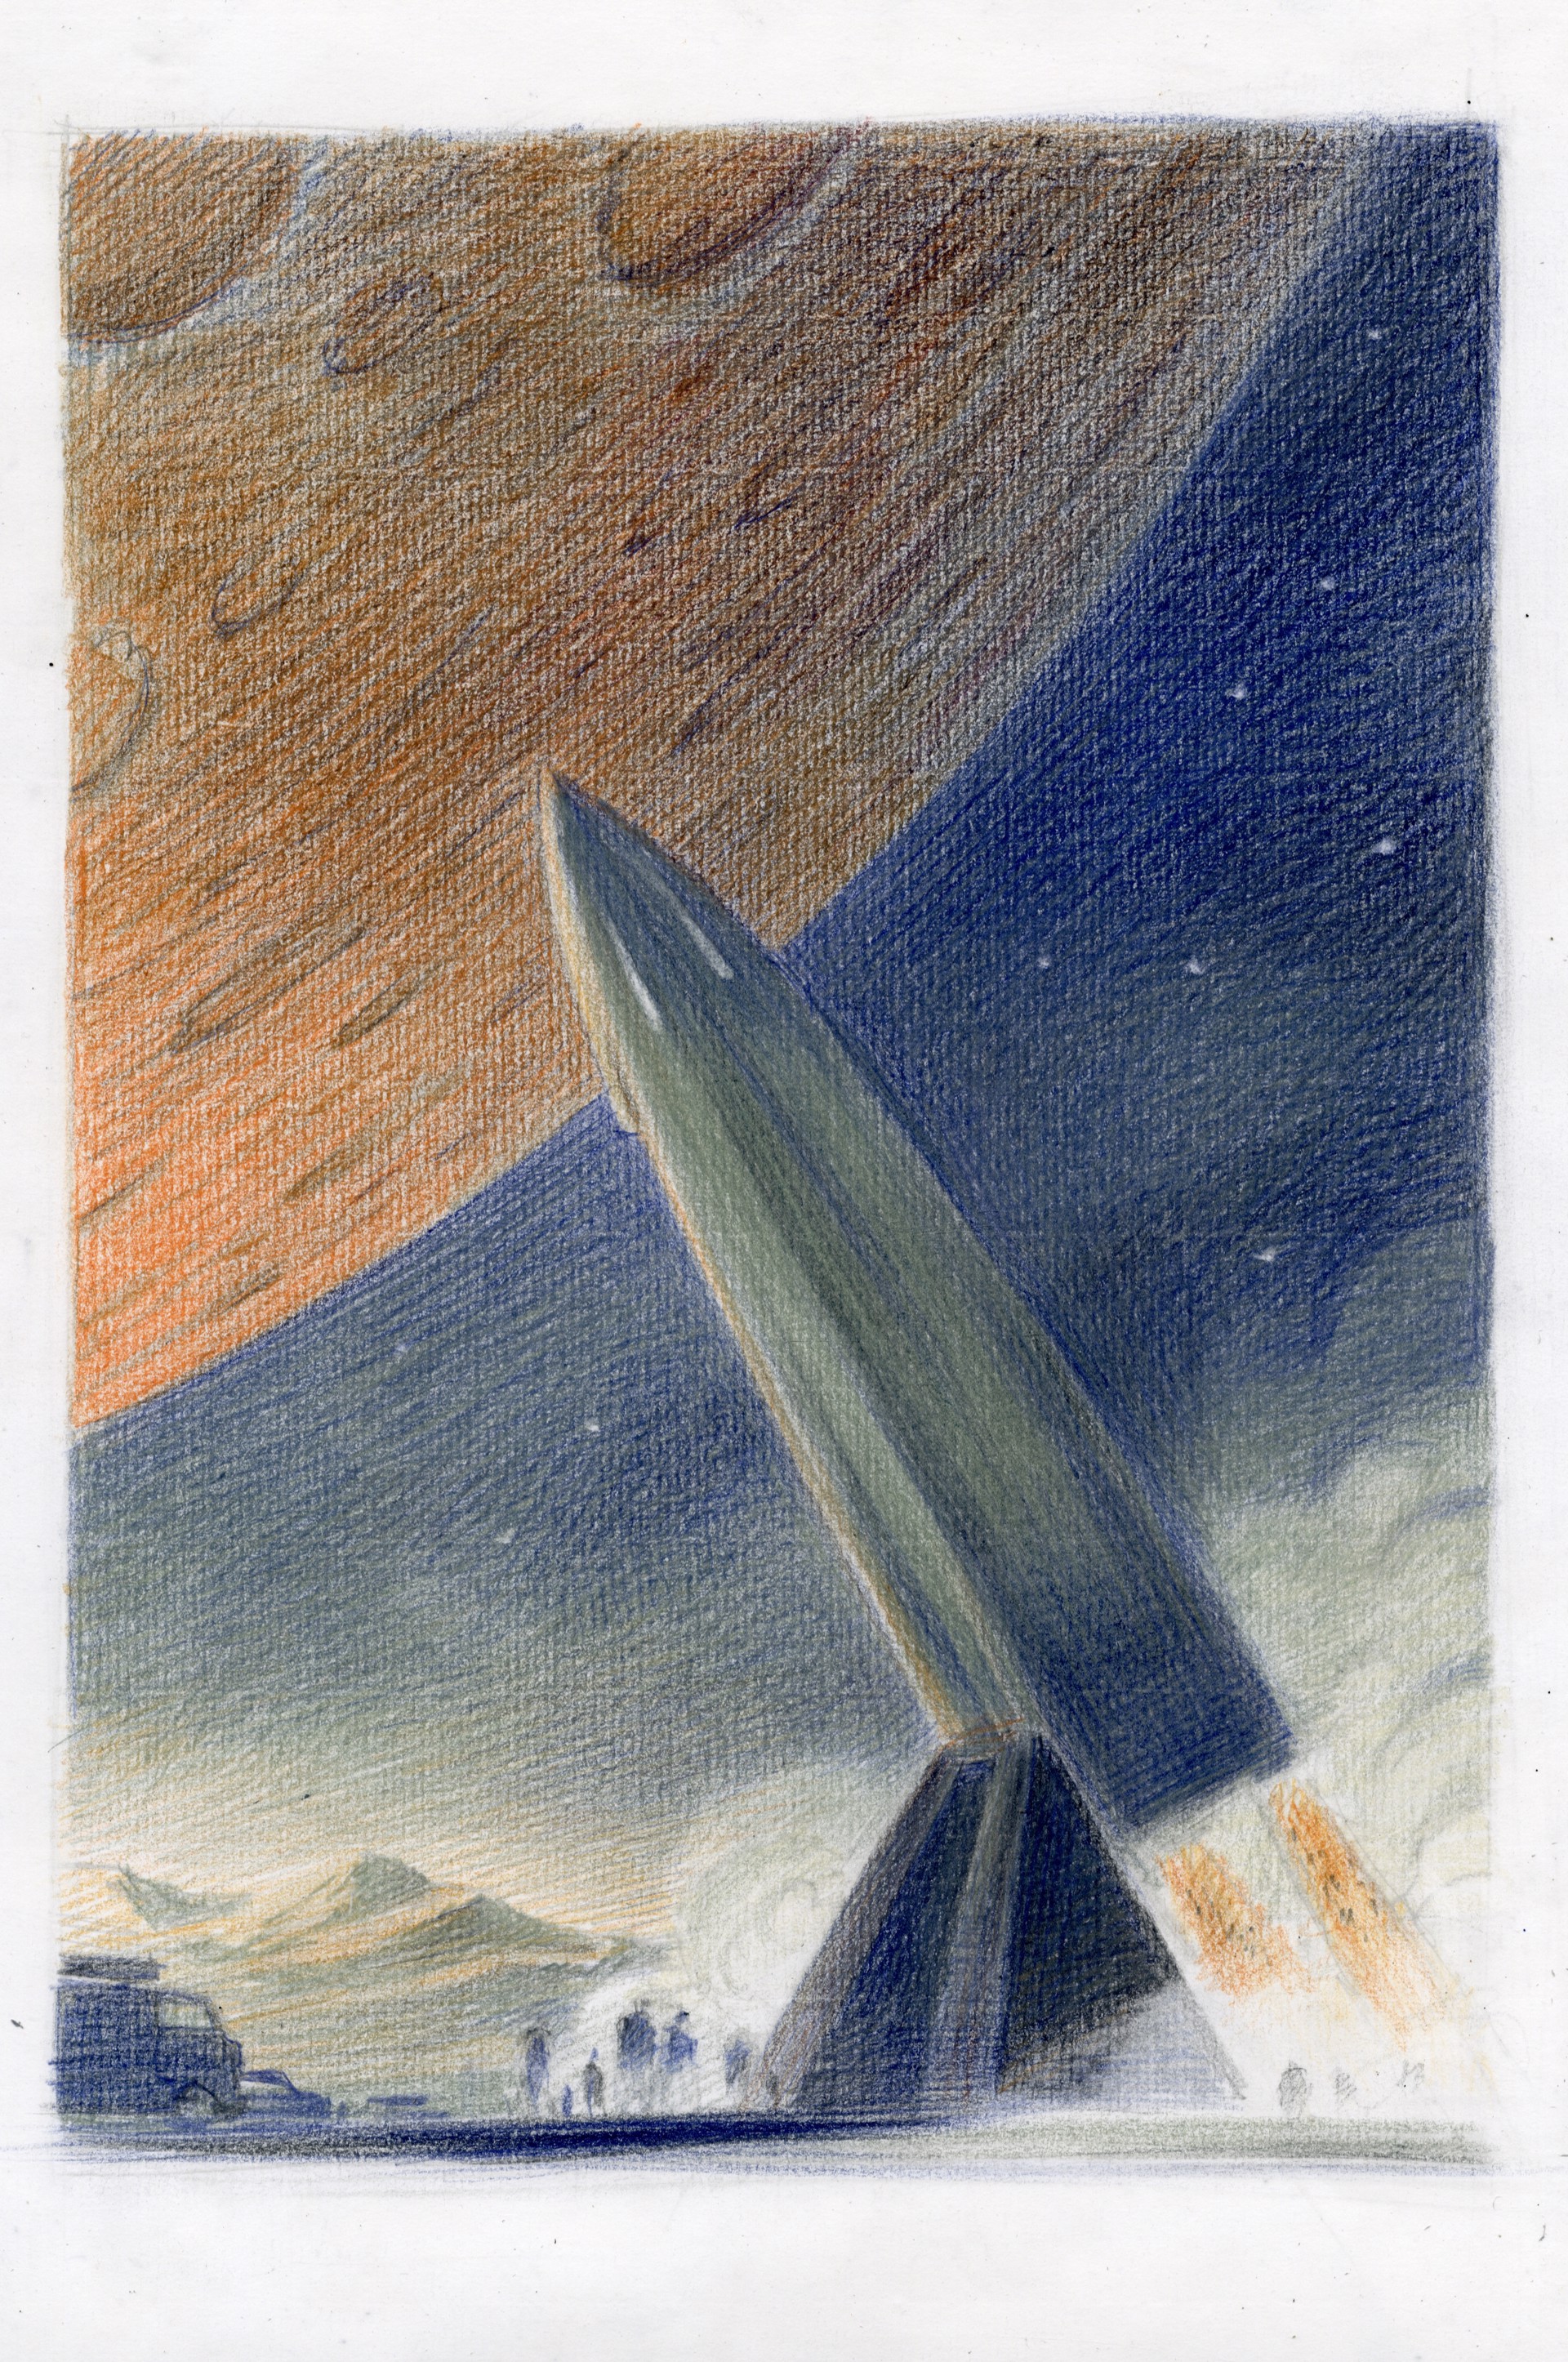 Objectif Mars - Sketch #2 by François Schuiten